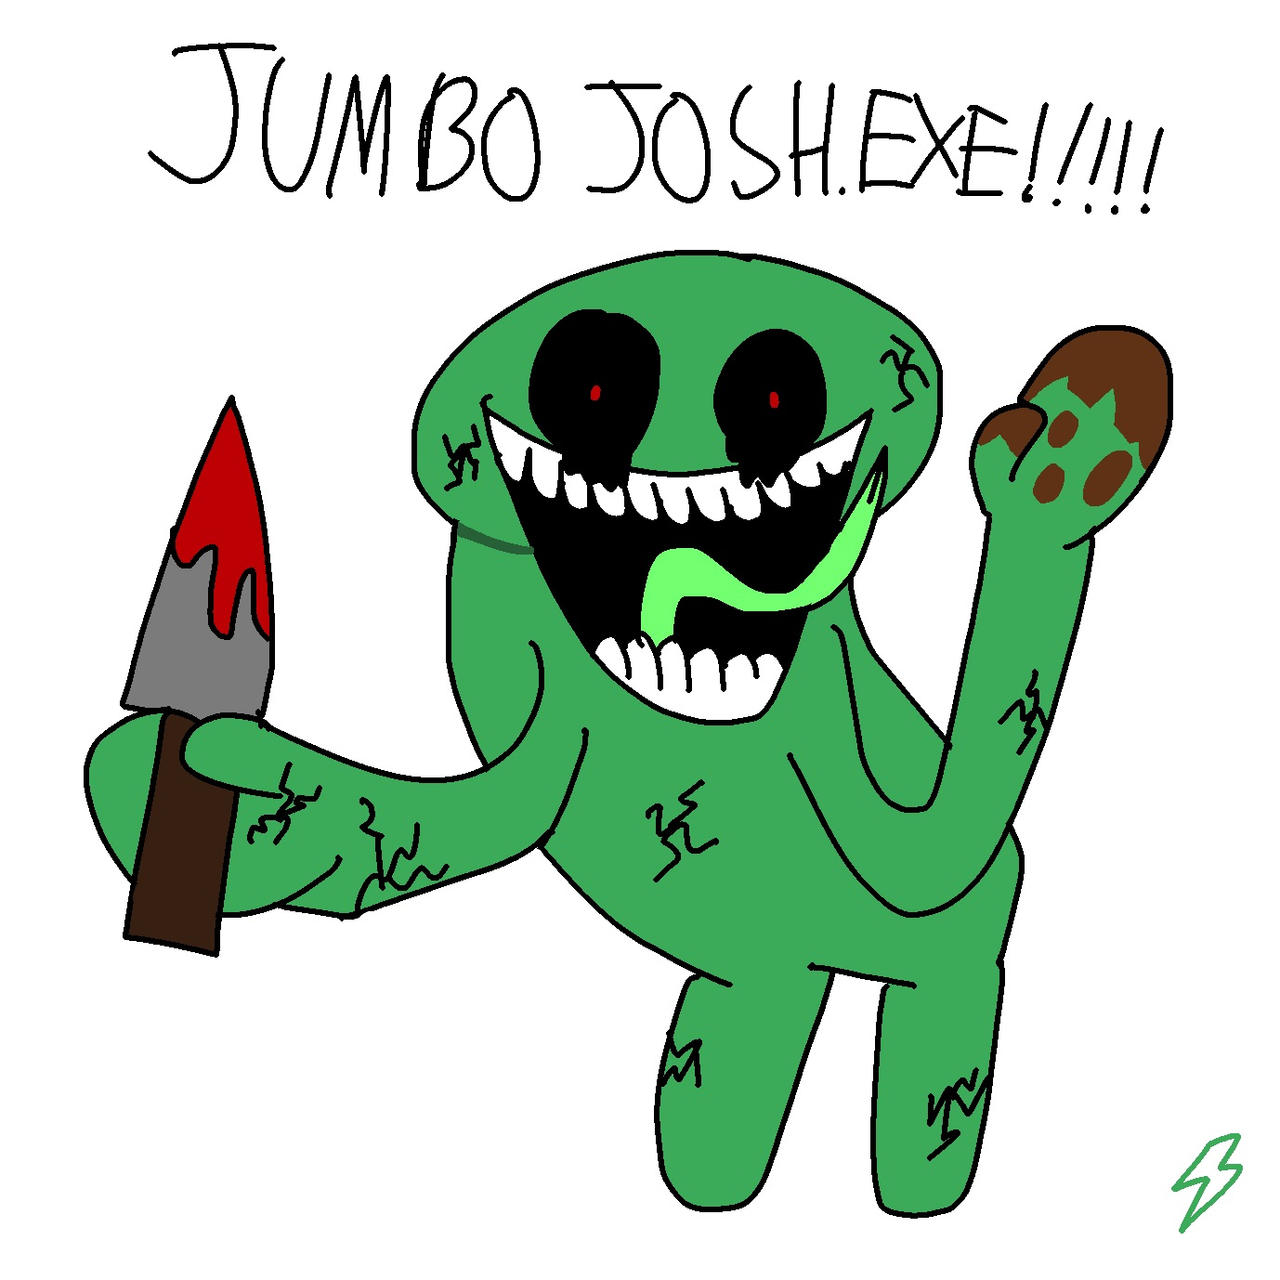 Redesigned Jumbo Josh by CrispyToastYT on Newgrounds